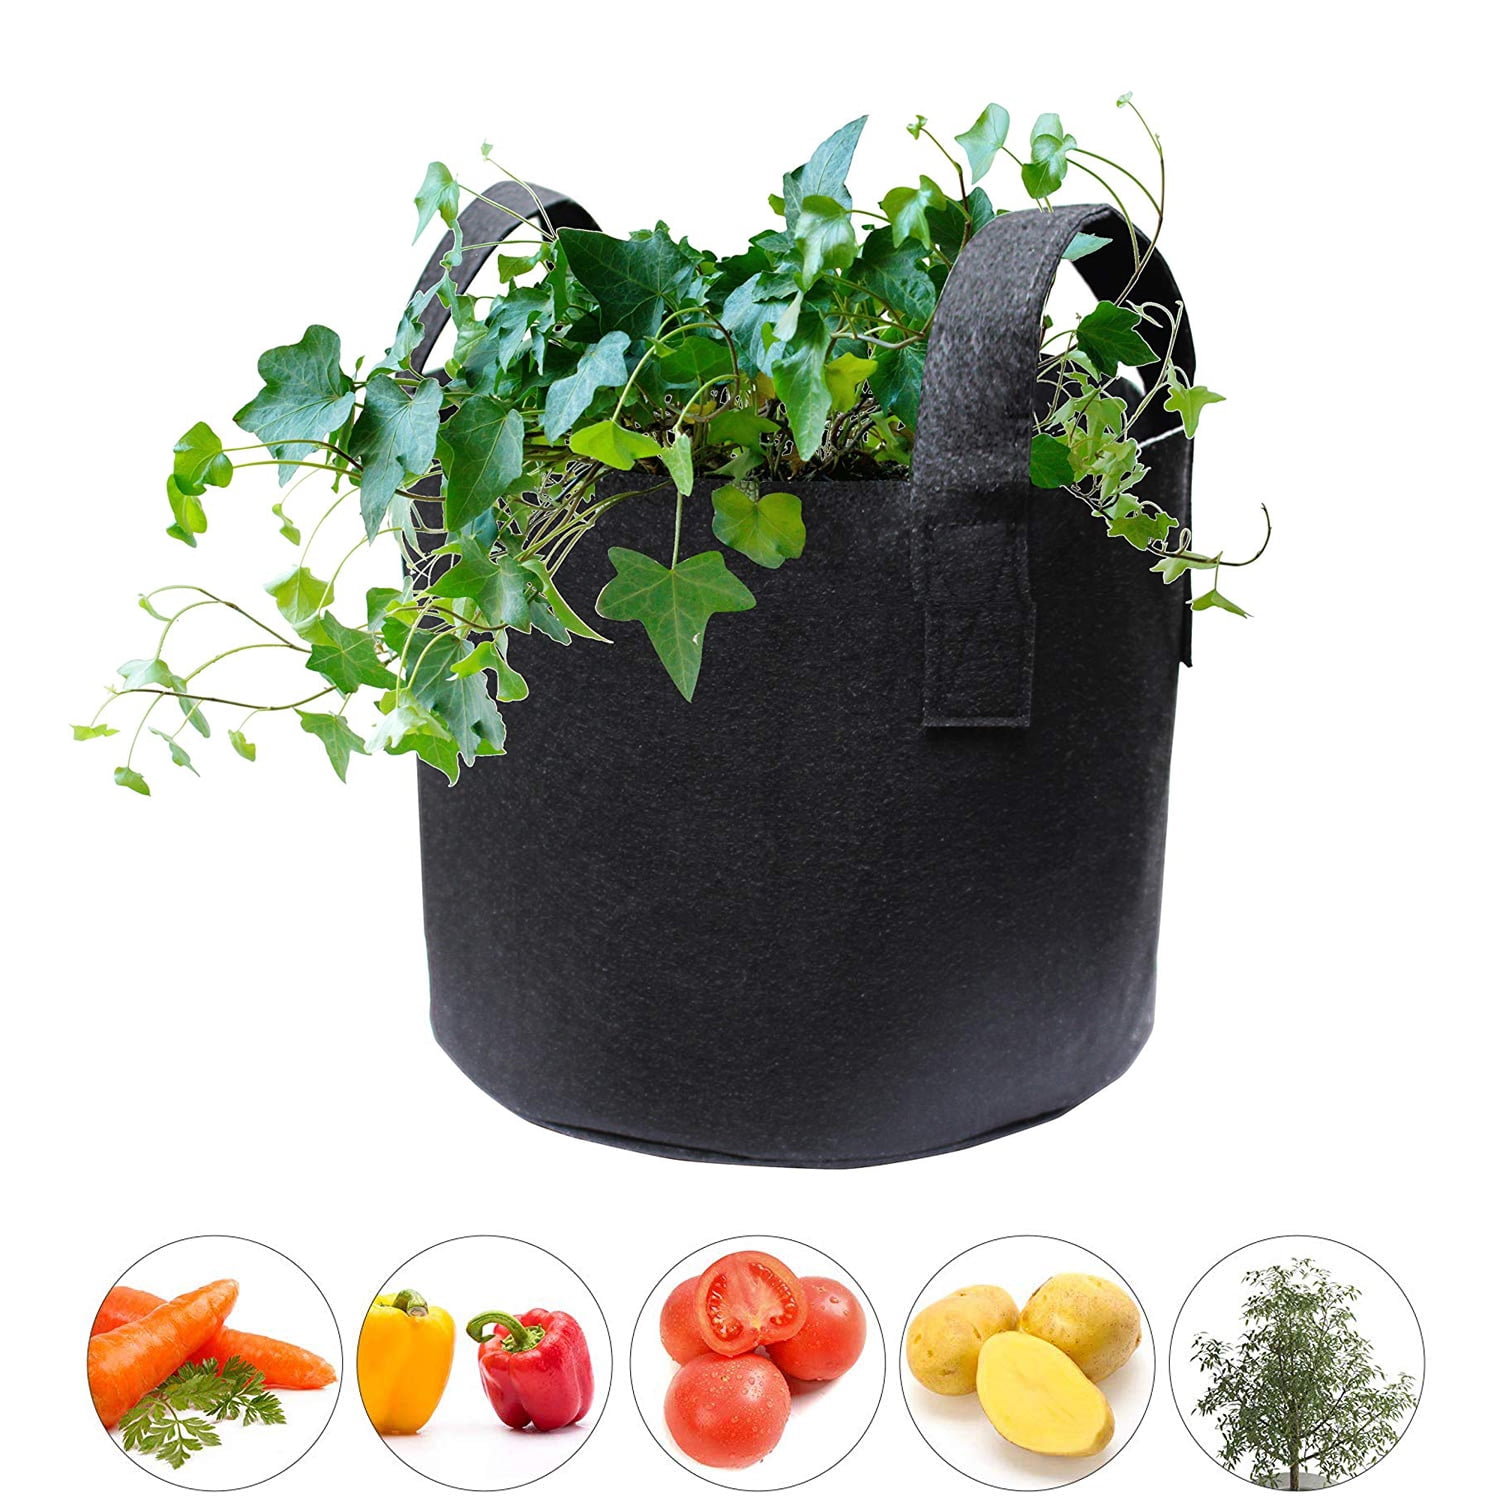 Plant Aeration 1 1/2 GALLON 5 Smart Pots & Felt Fabric Grow Bags 2 